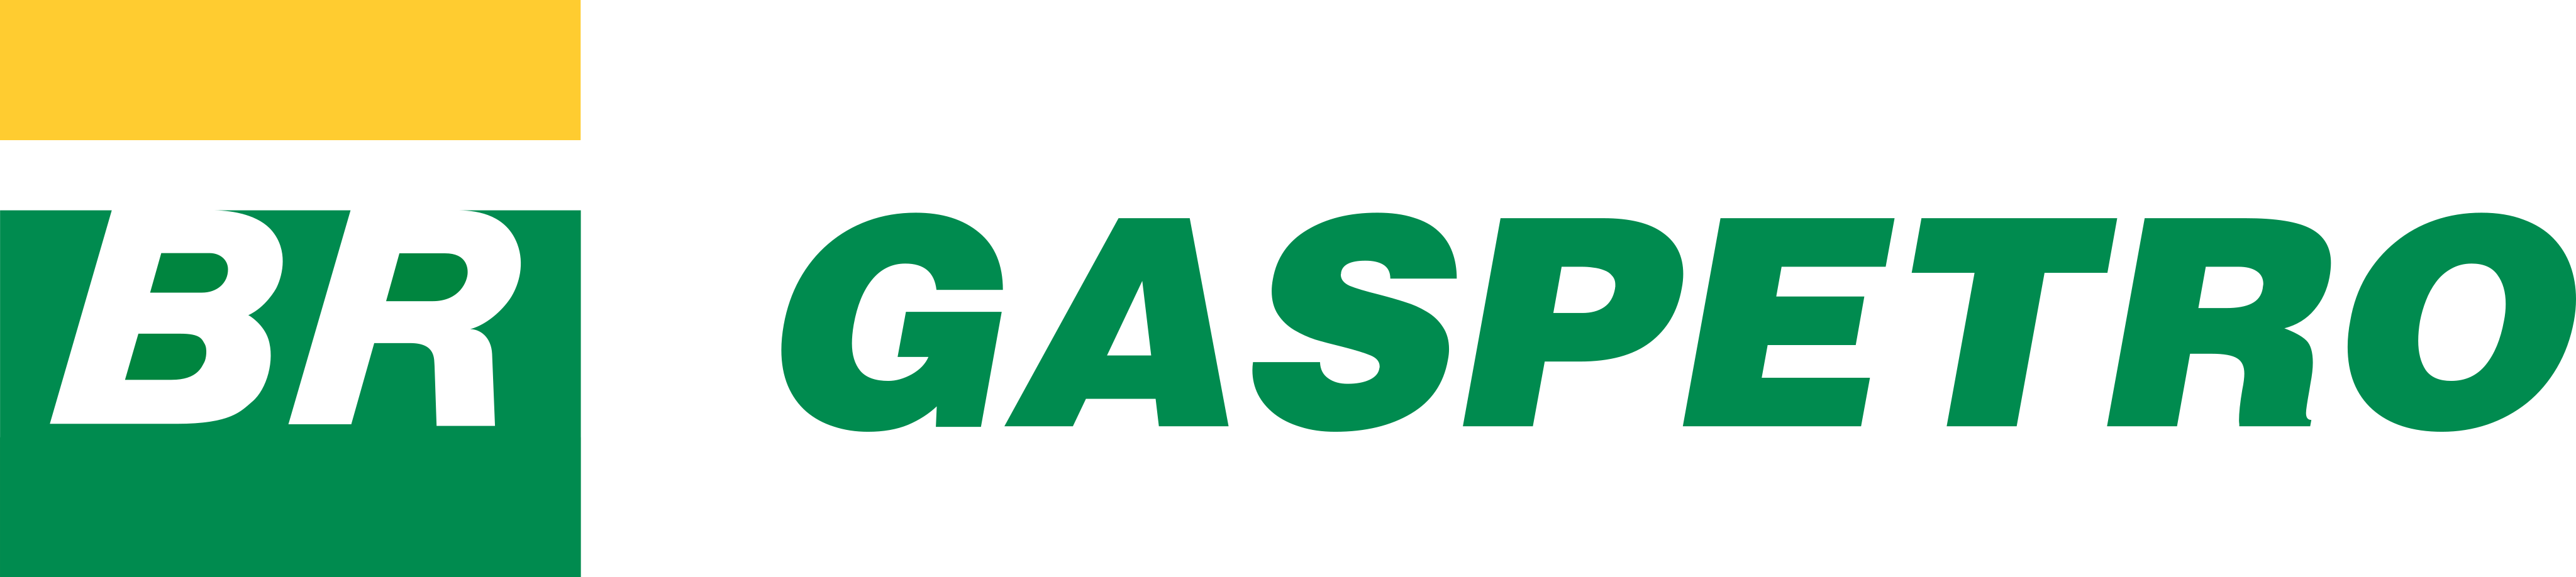 Gaspetro Logo.